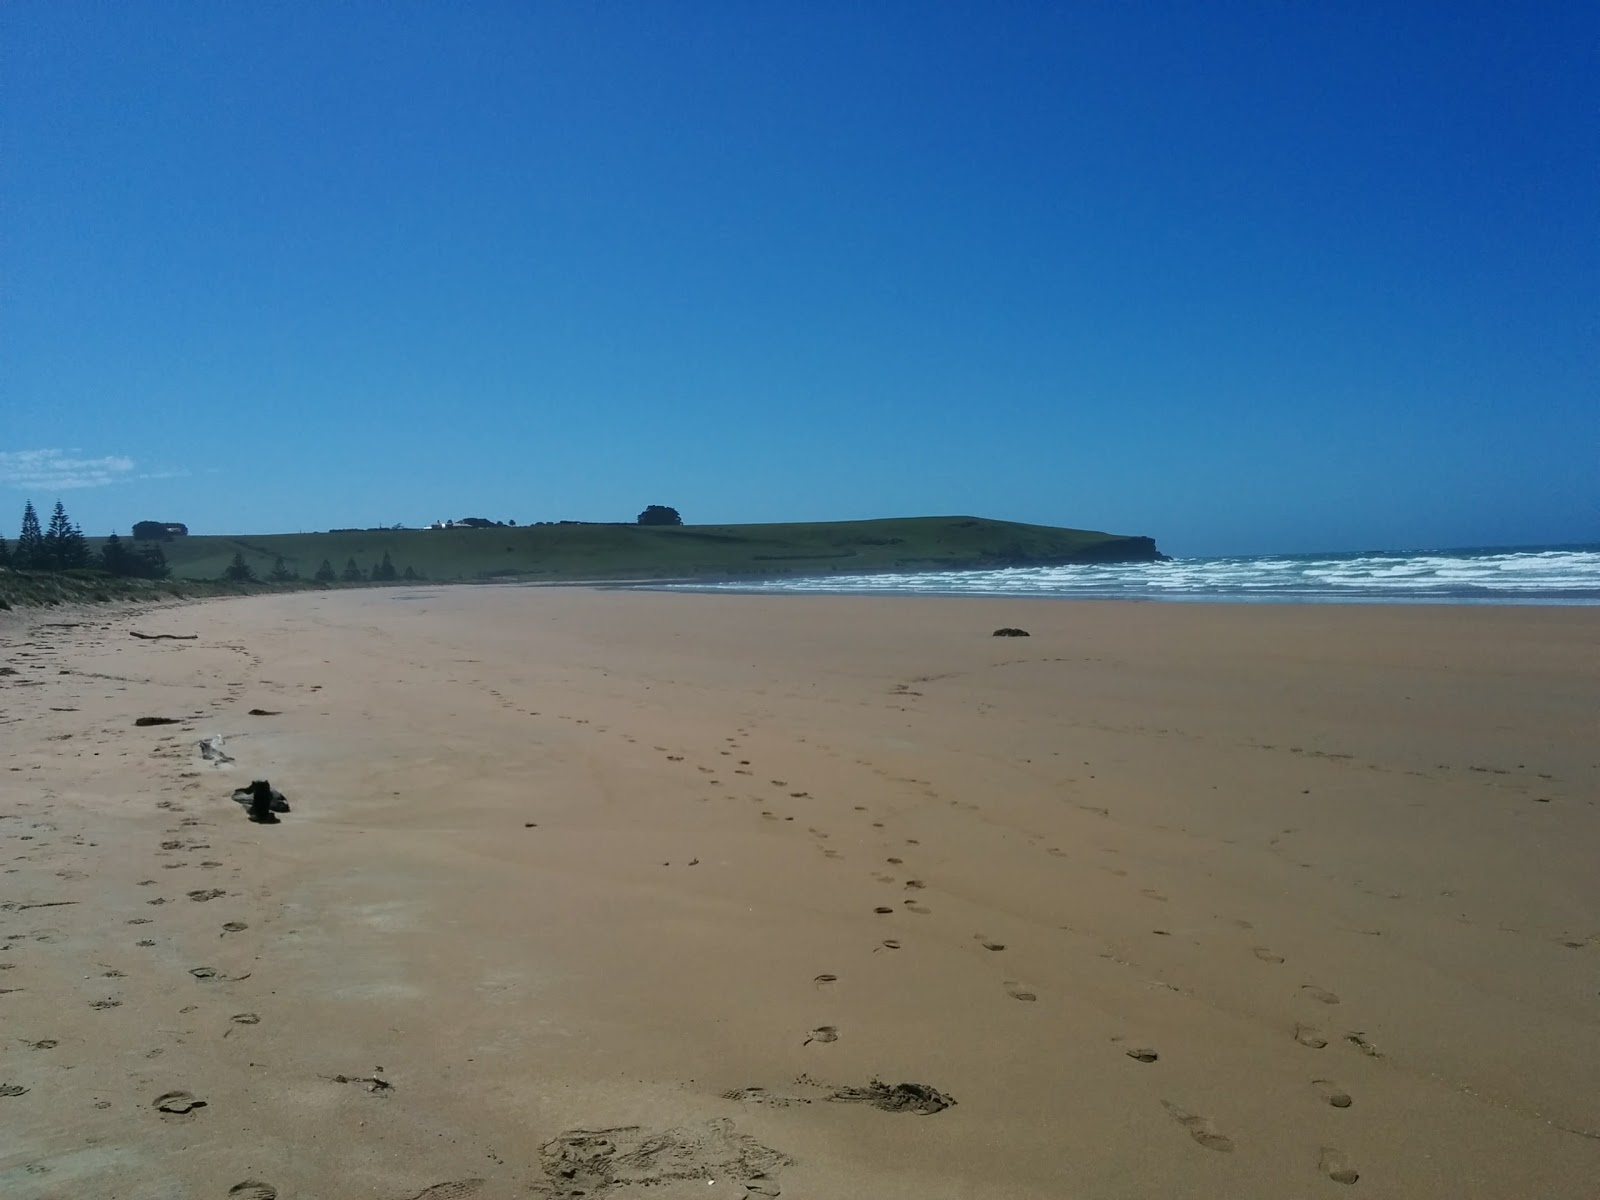 Foto de Godfreys Beach - lugar popular entre os apreciadores de relaxamento